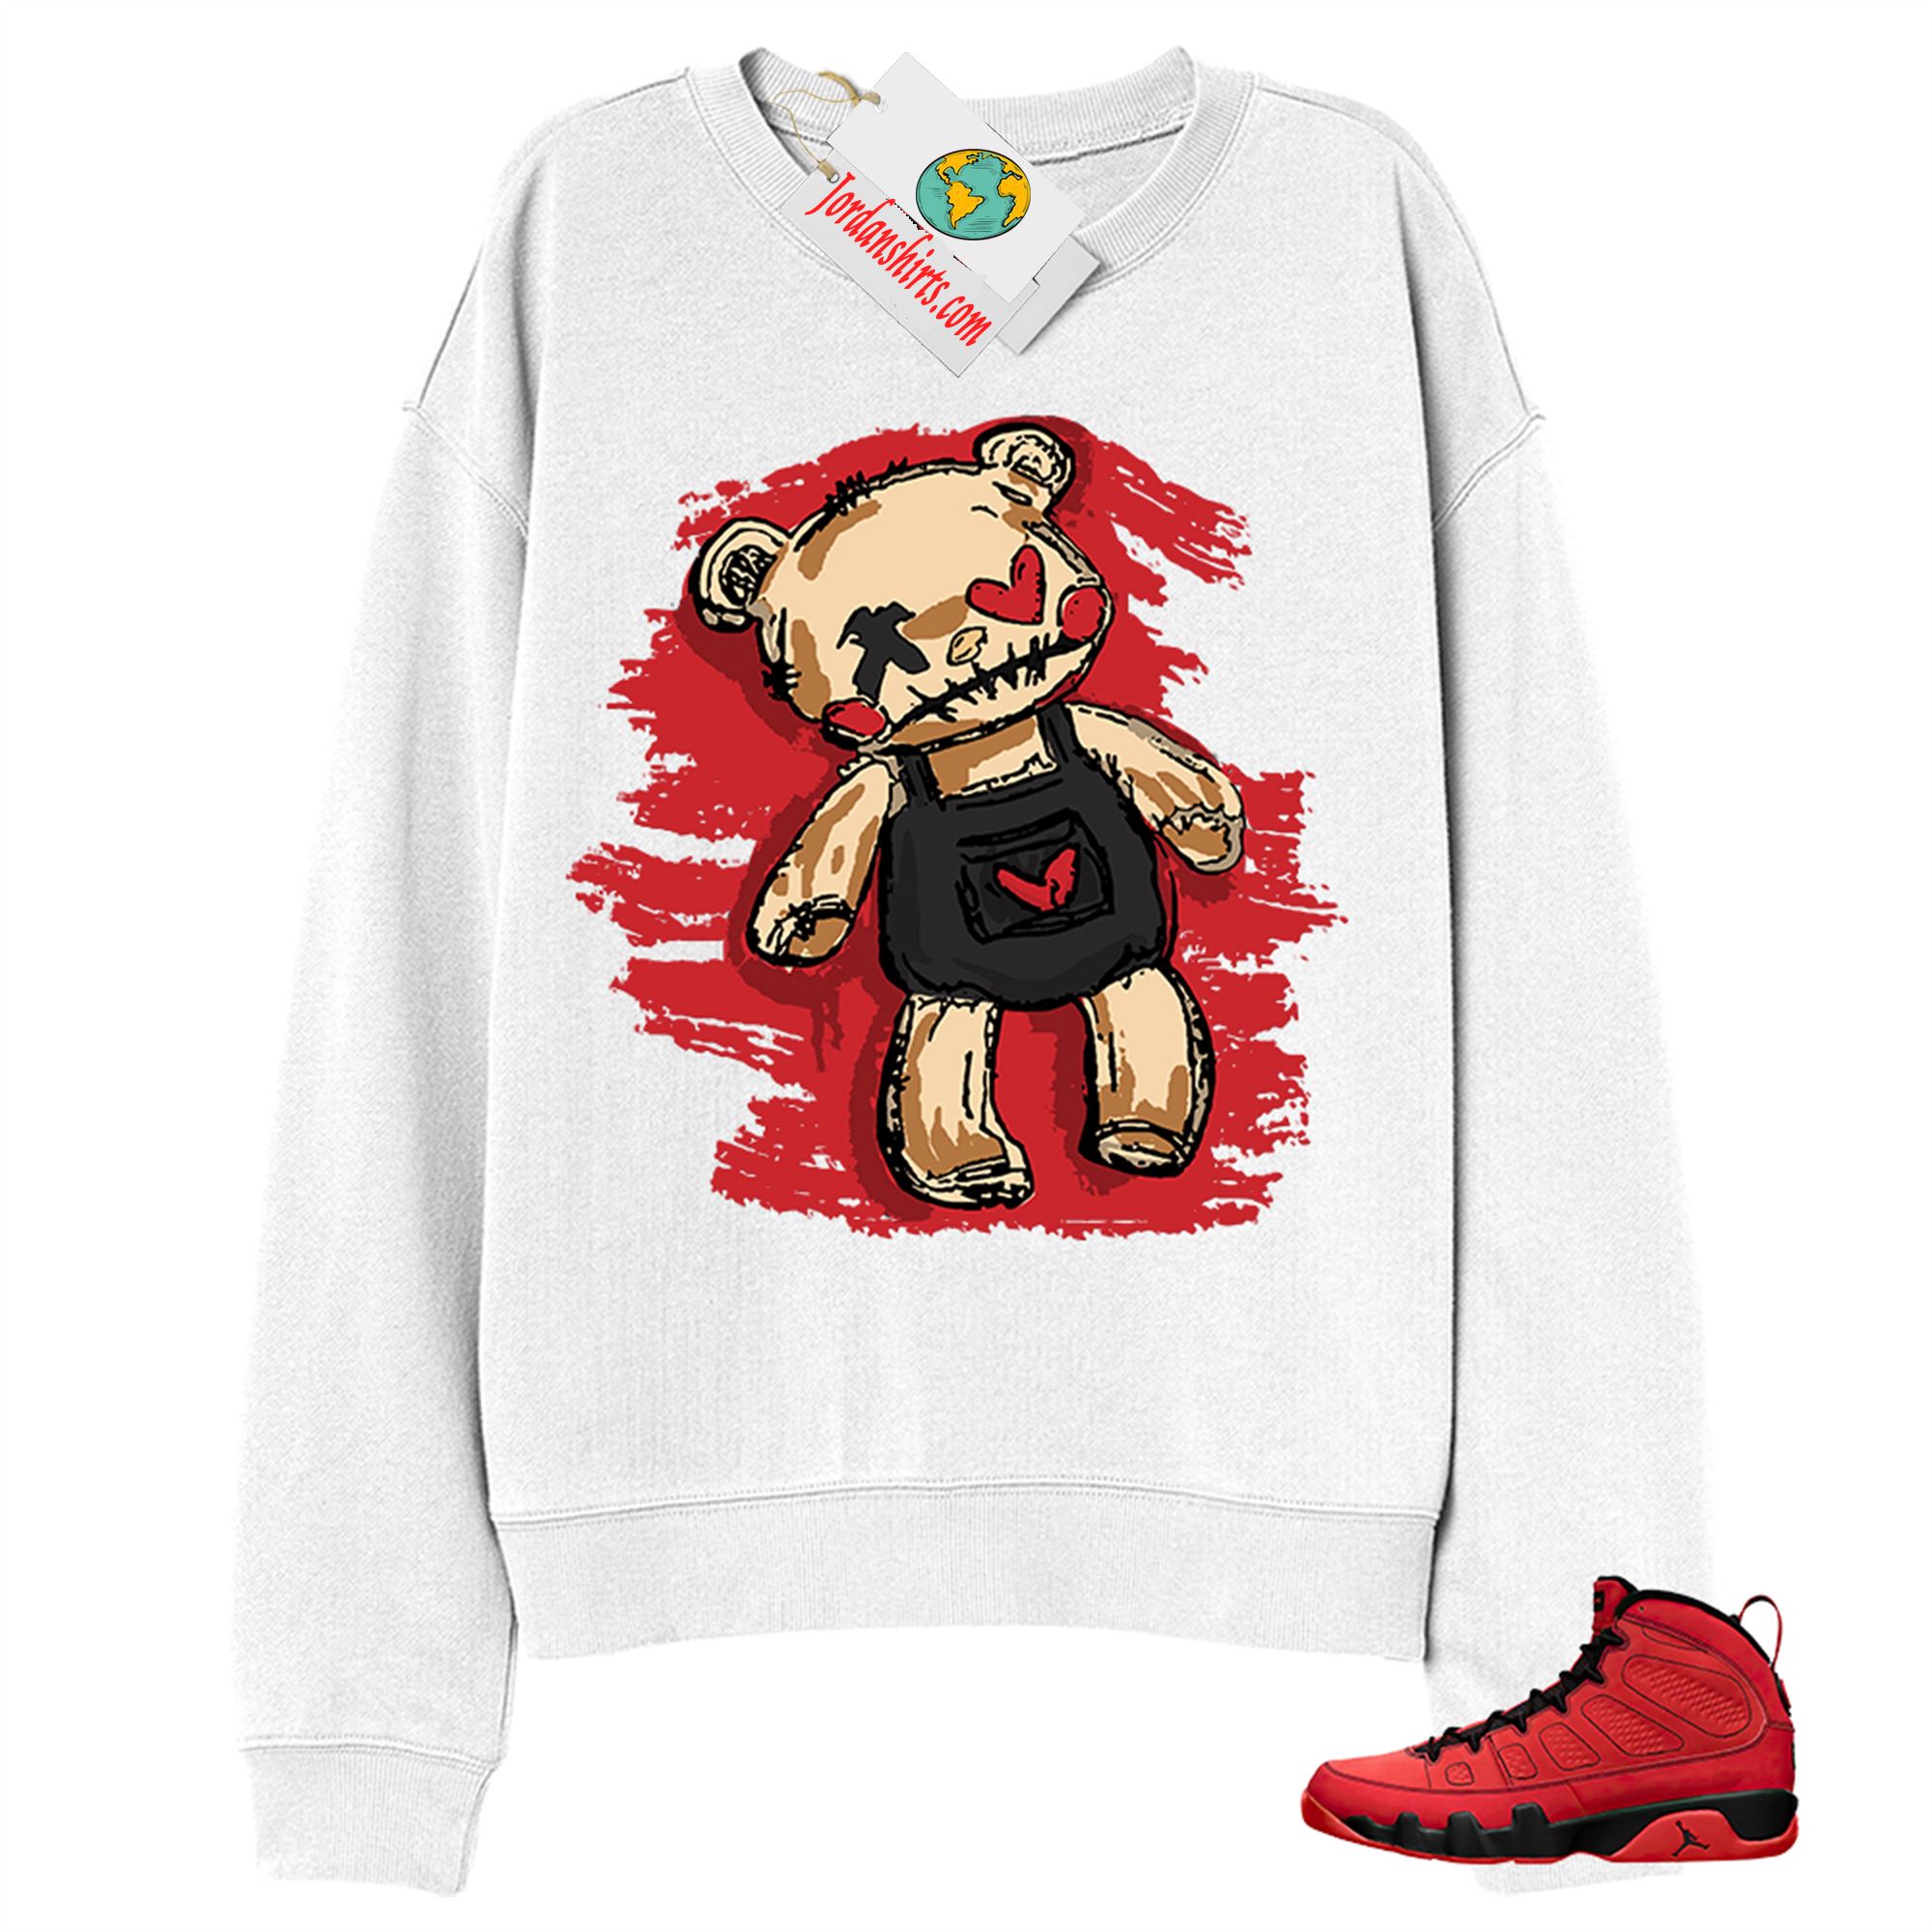 Jordan 9 Sweatshirt, Teddy Bear Broken Heart White Sweatshirt Air Jordan 9 Chile Red 9s Plus Size Up To 5xl